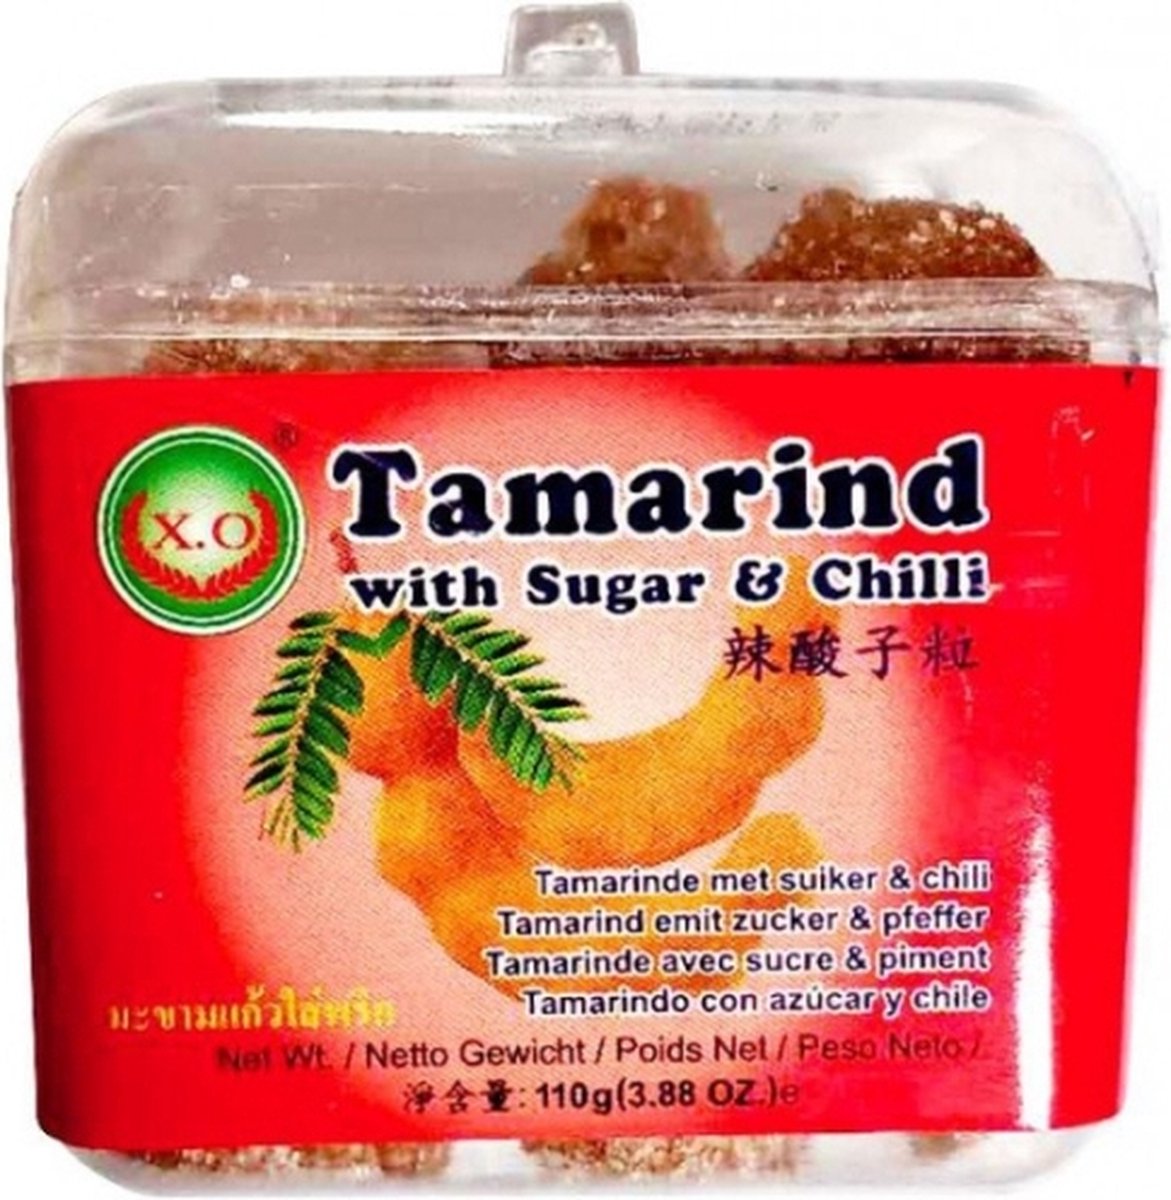 X.O Tamarind Balls With Sugar & Chilli (110g)